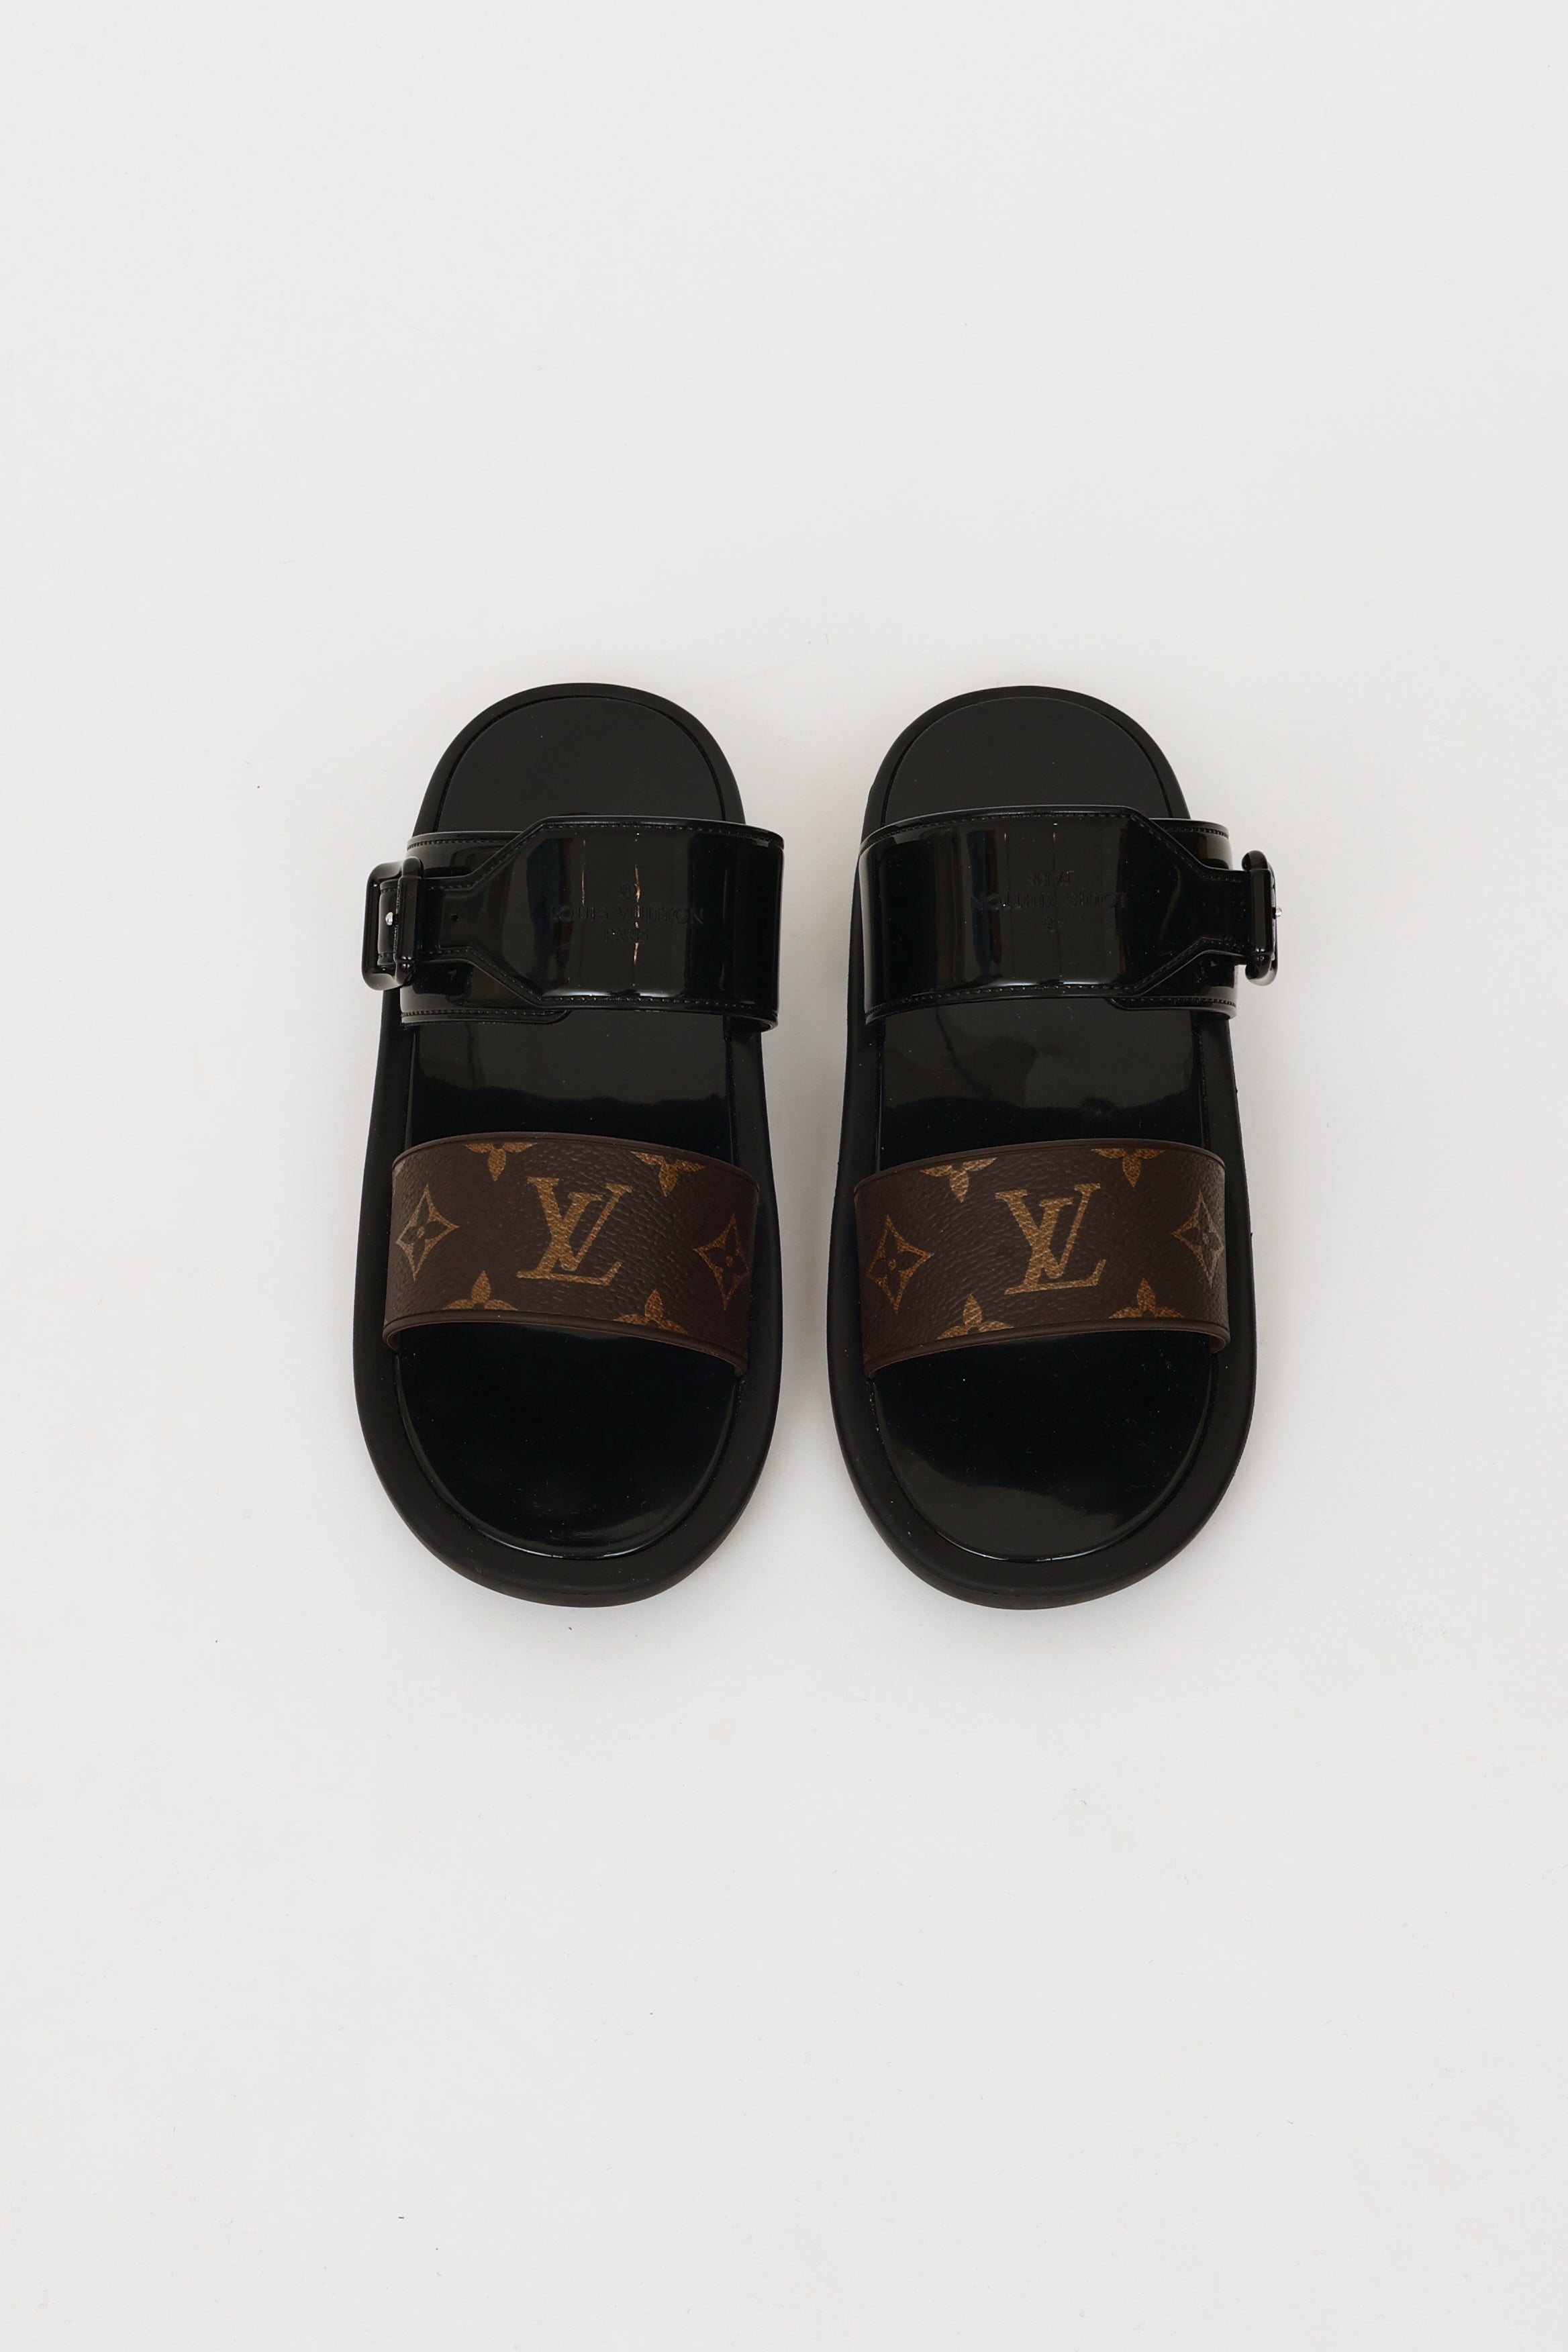 LOUIS VUITTON Monogram Sunbath Flat Mule Sandals 36 Black 1288451